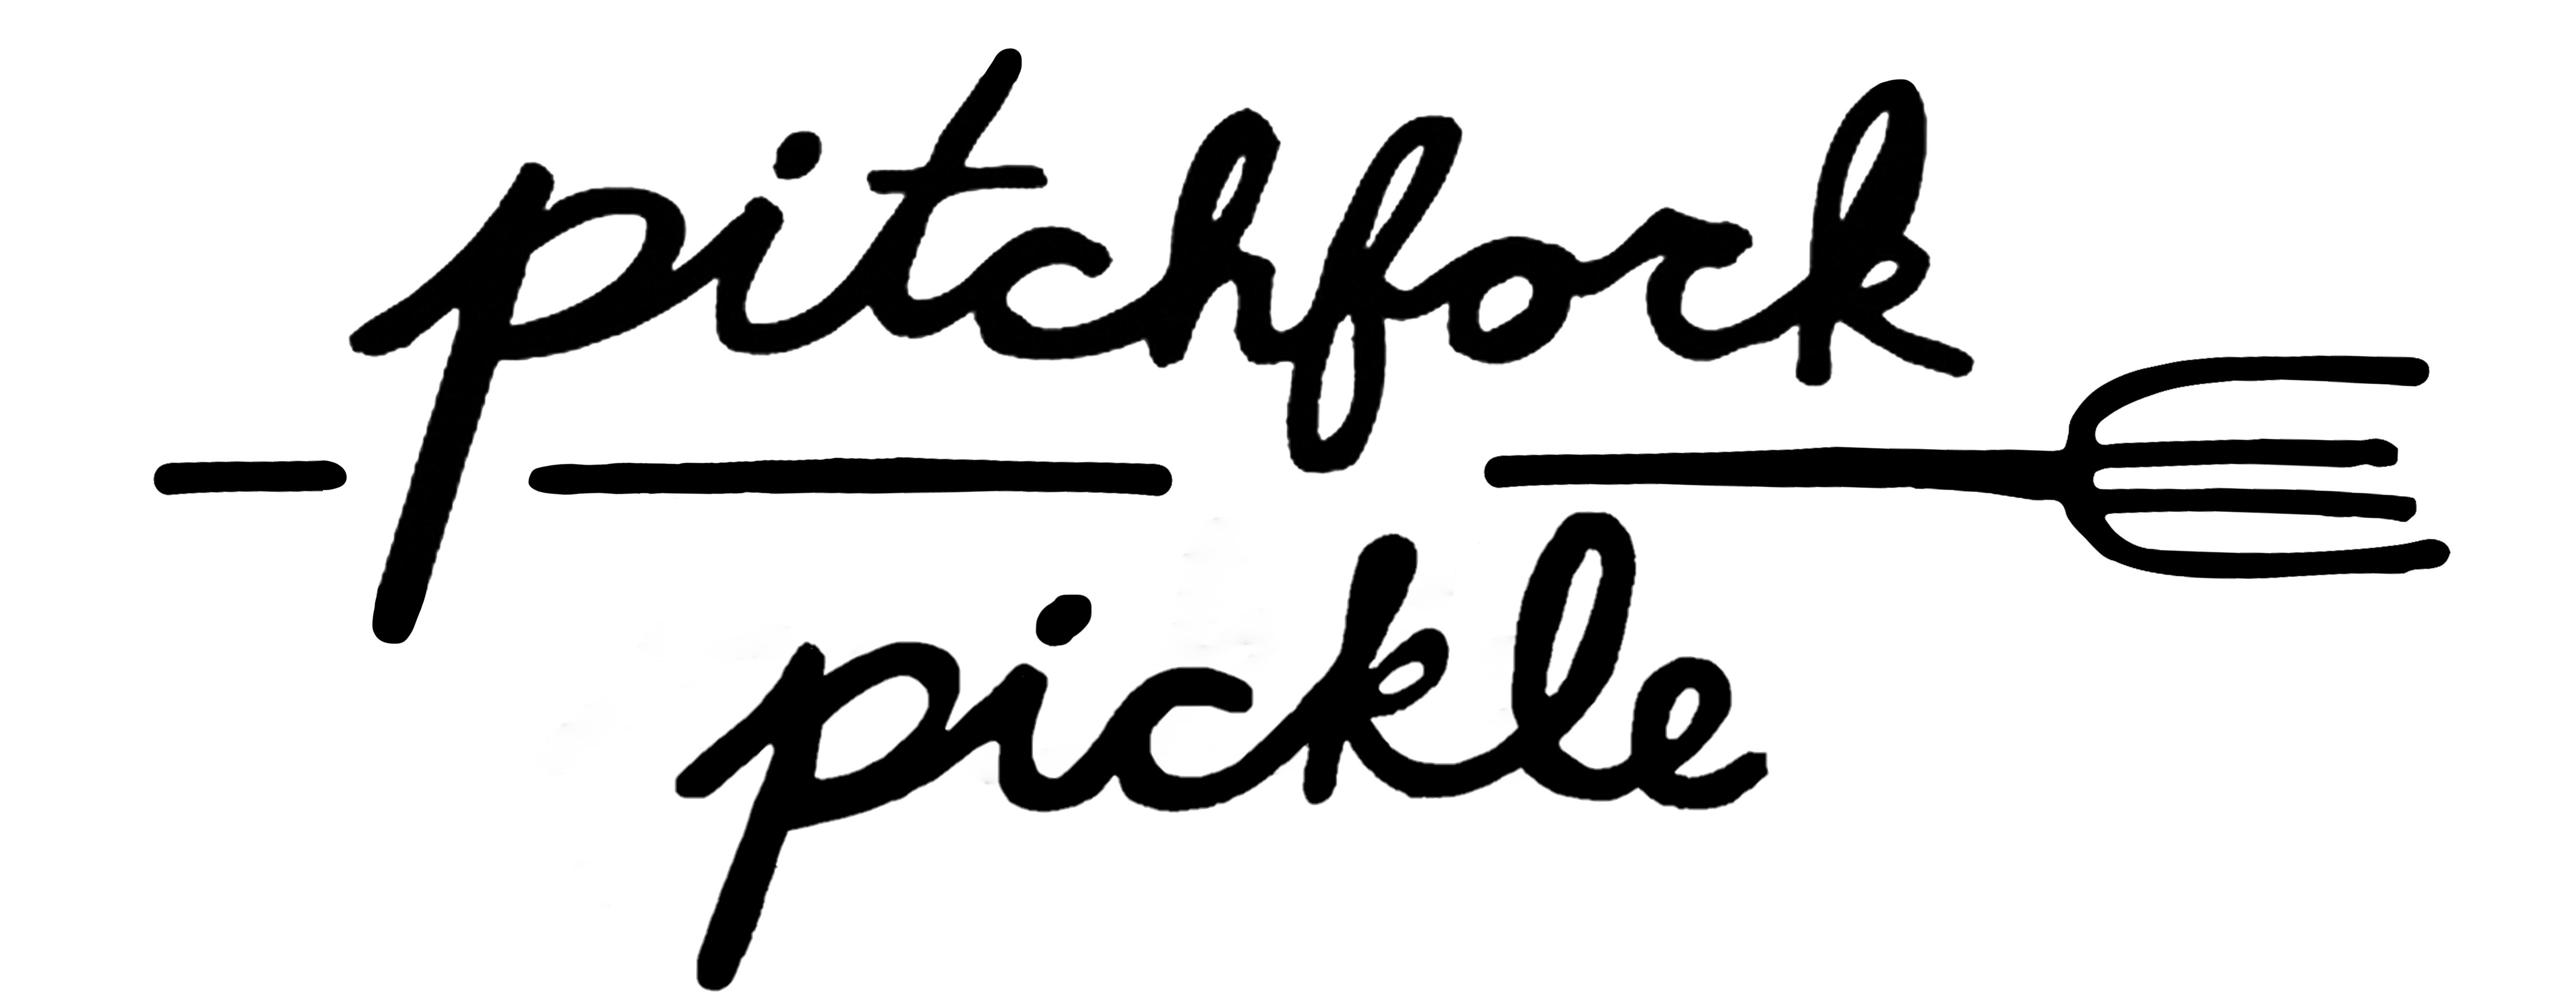 Logo Design for Pickle Party by JohneryArtCreatives on DeviantArt